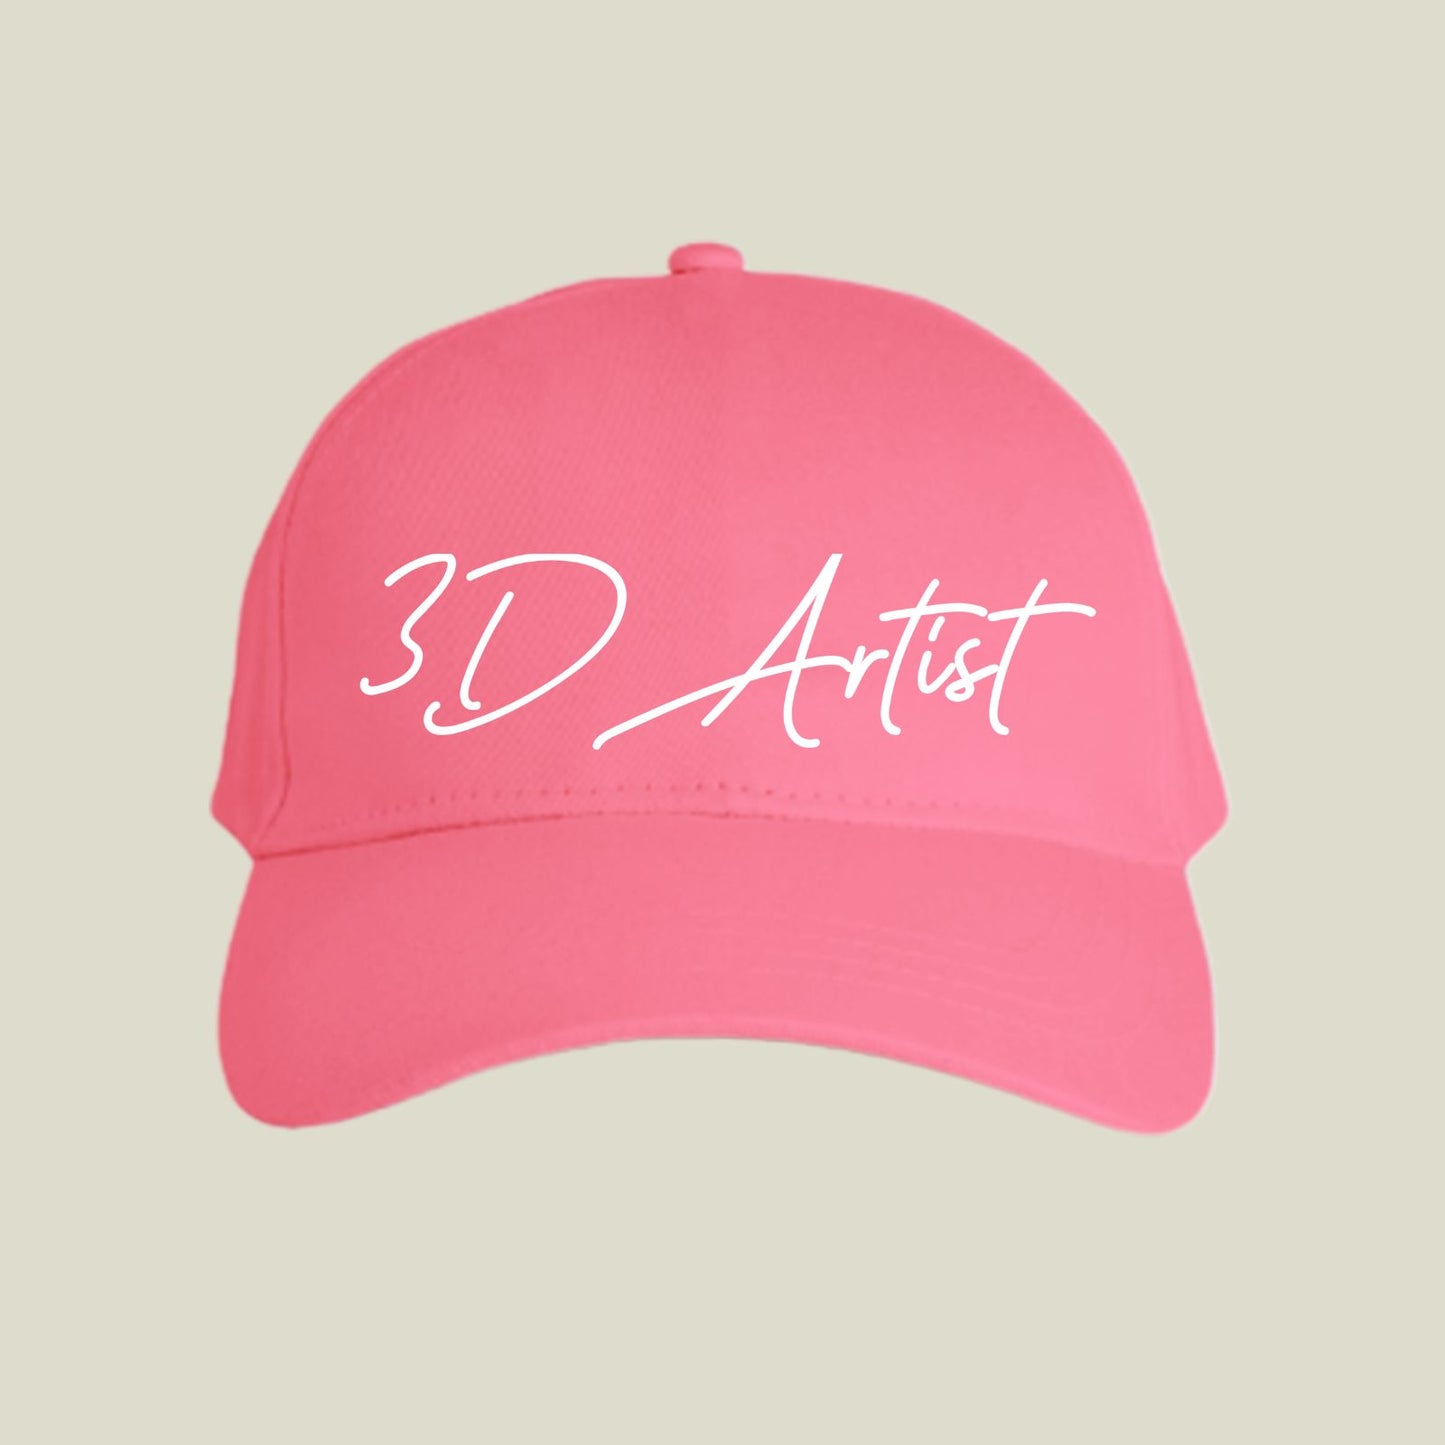 3D Artist Cap C-DAR1